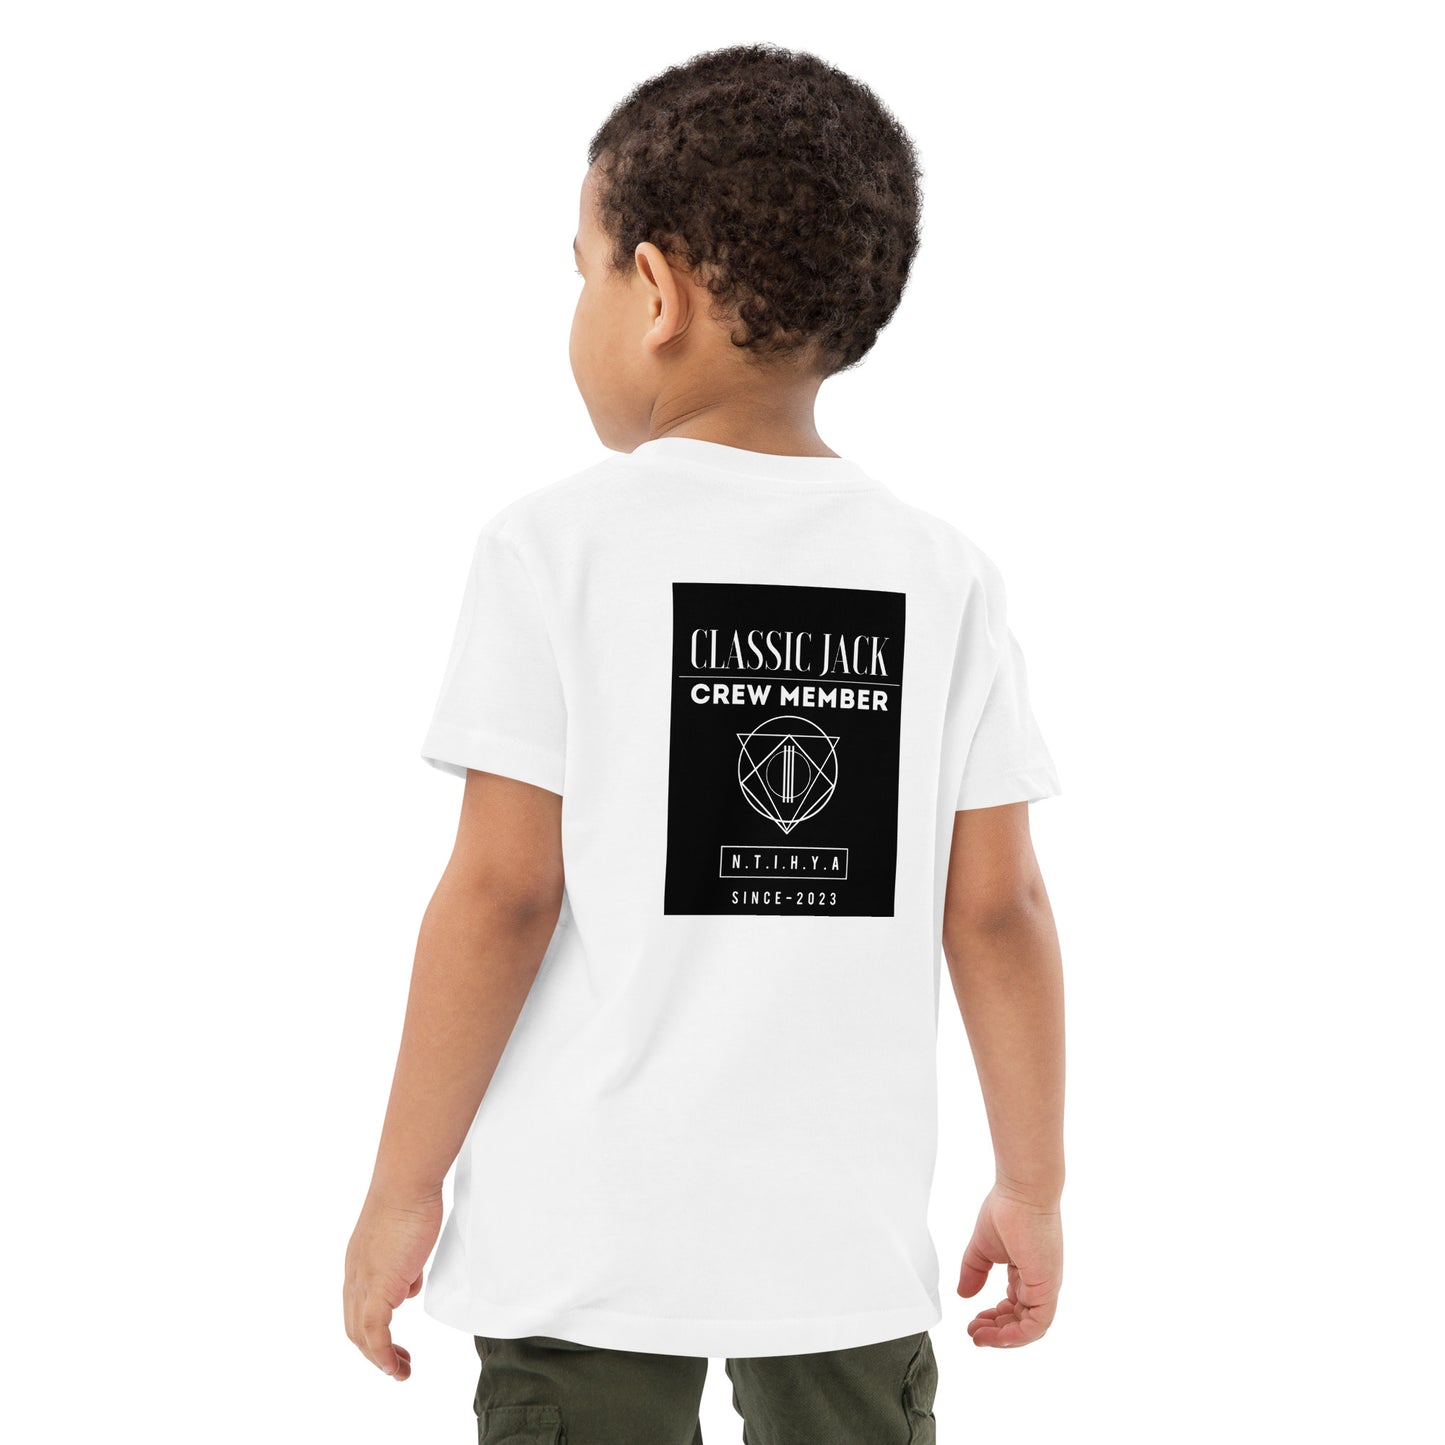 Members Only - Organic cotton kids t-shirt